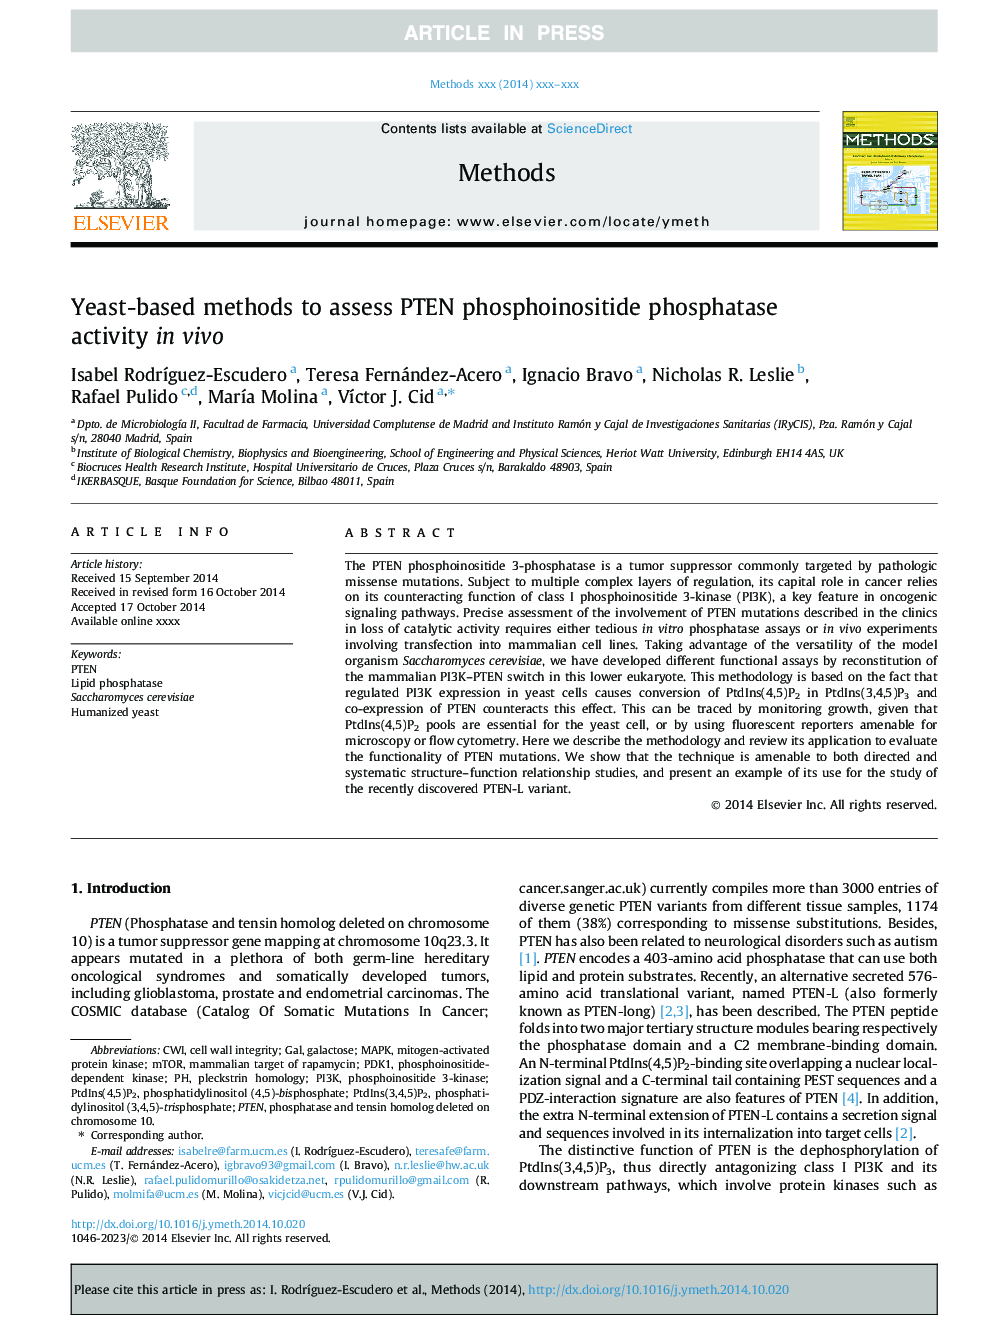 Yeast-based methods to assess PTEN phosphoinositide phosphatase activity in vivo